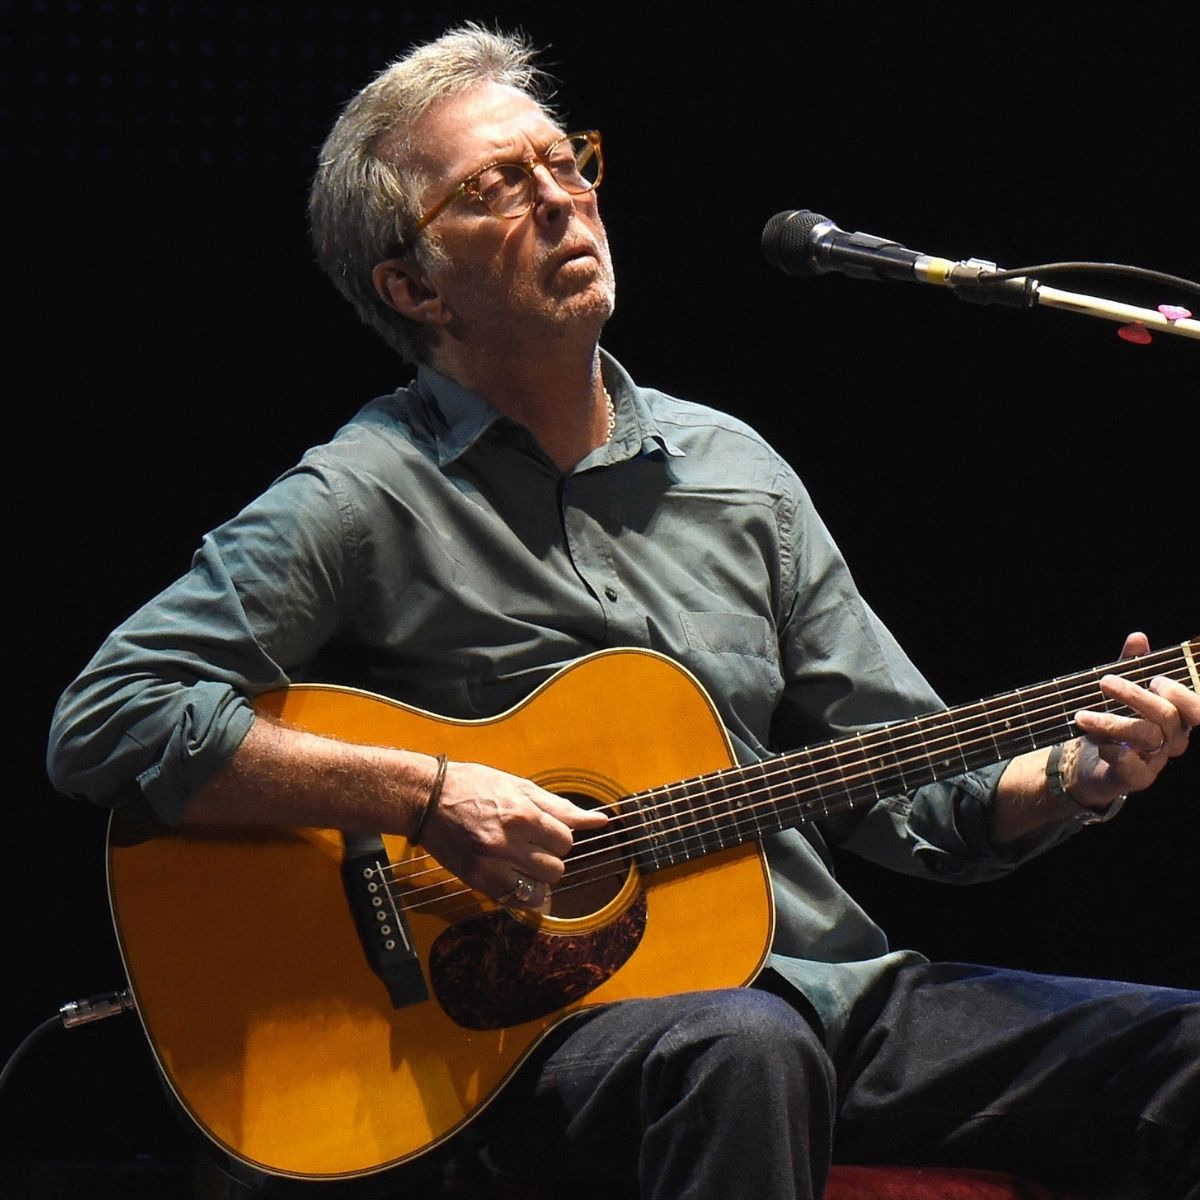 Eric Clapton today